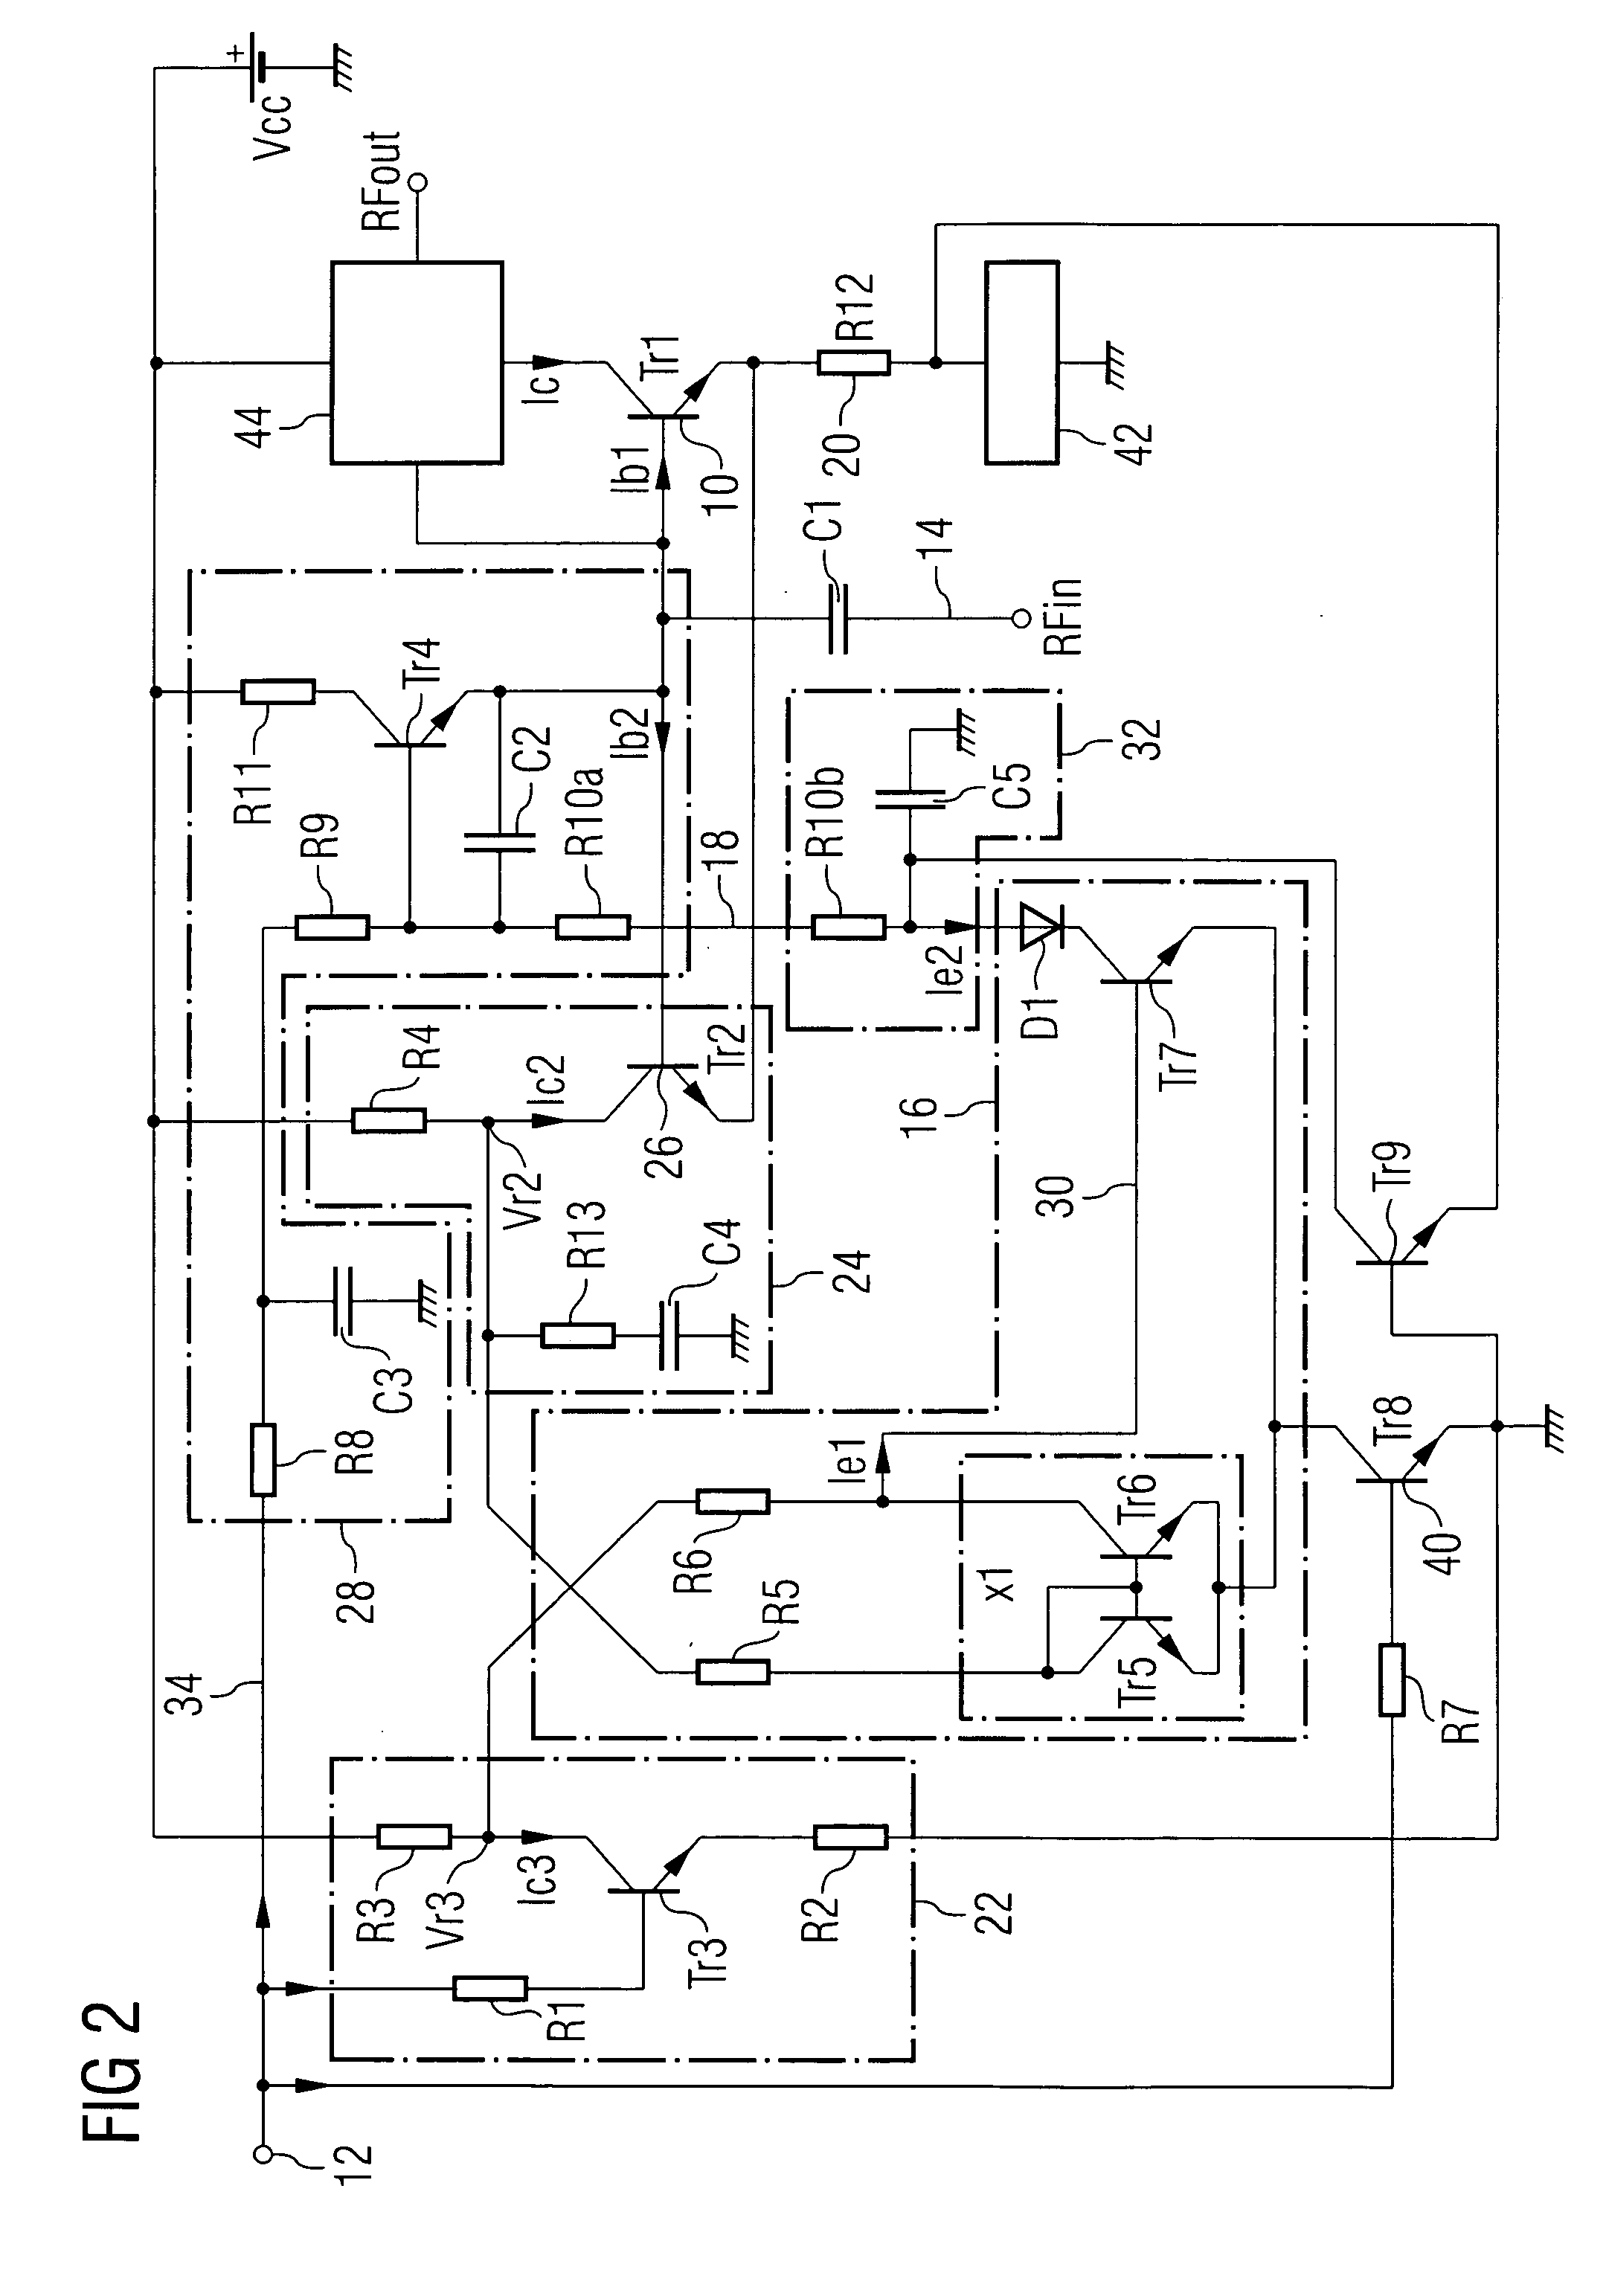 Bias circuit for a bipolar transistor